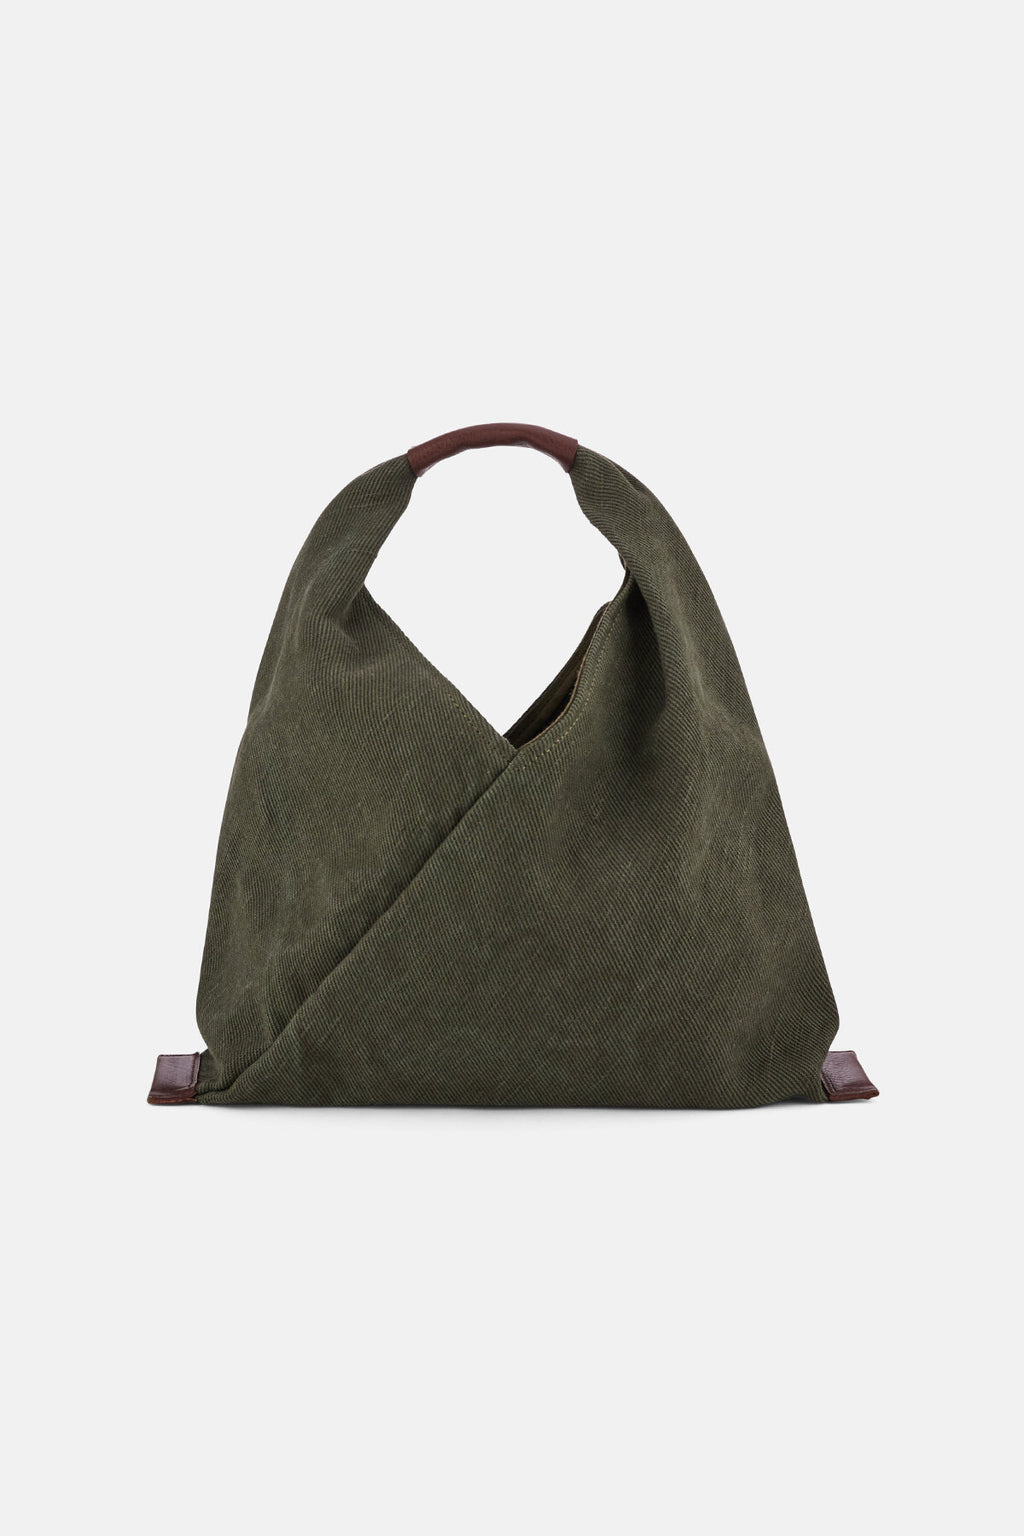 Azuma Jute Bag Khaki green by Hender Scheme | Unisex | WP Store